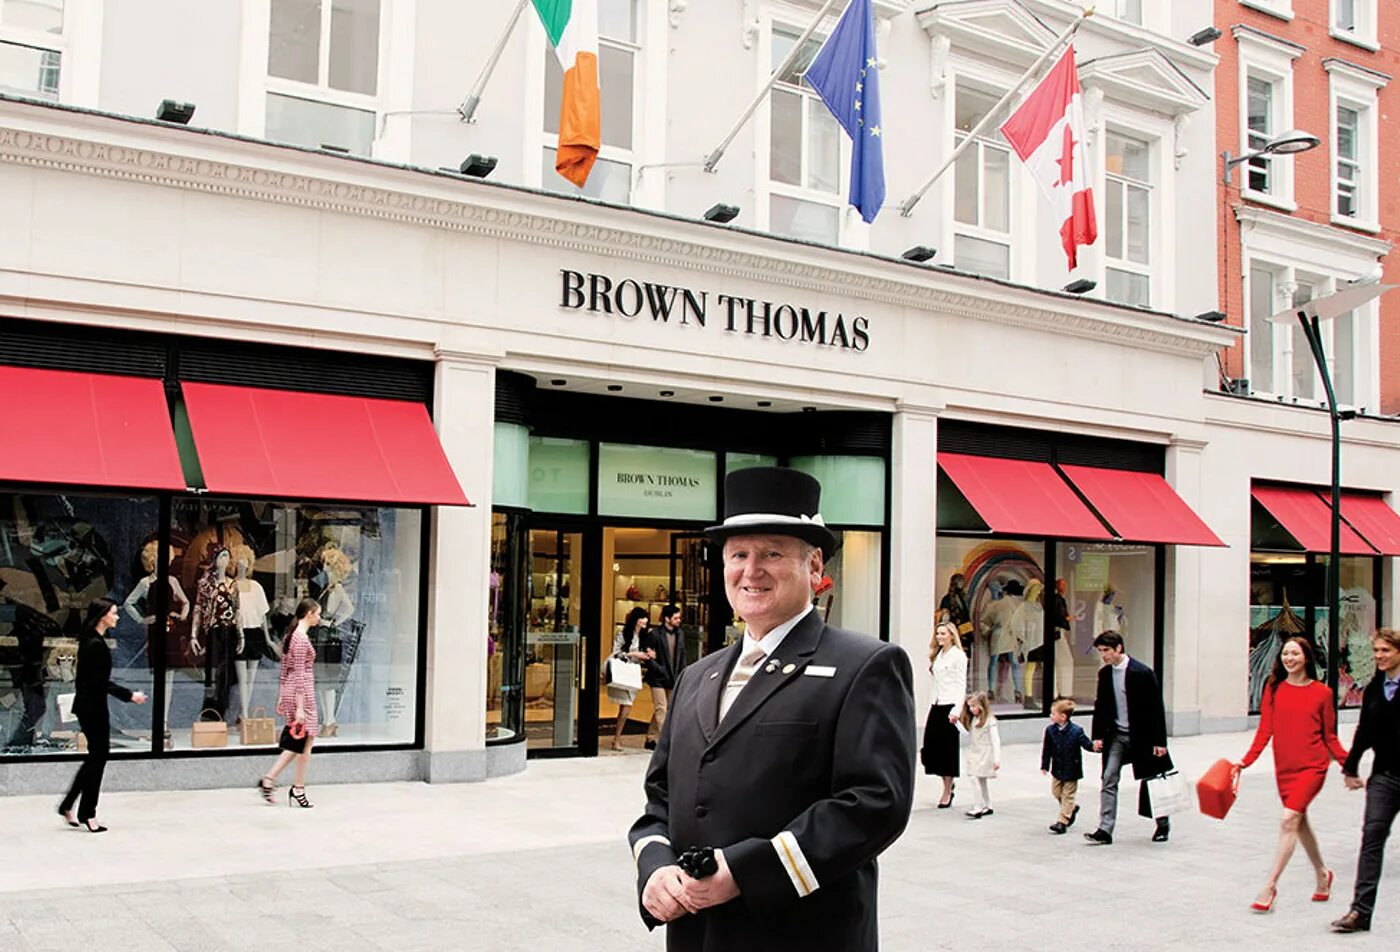 Brown shop. Brown Thomas. Dublin Braun Thomas. Том Браун магазины. Магазин Селфридж в Лондоне сейчас.